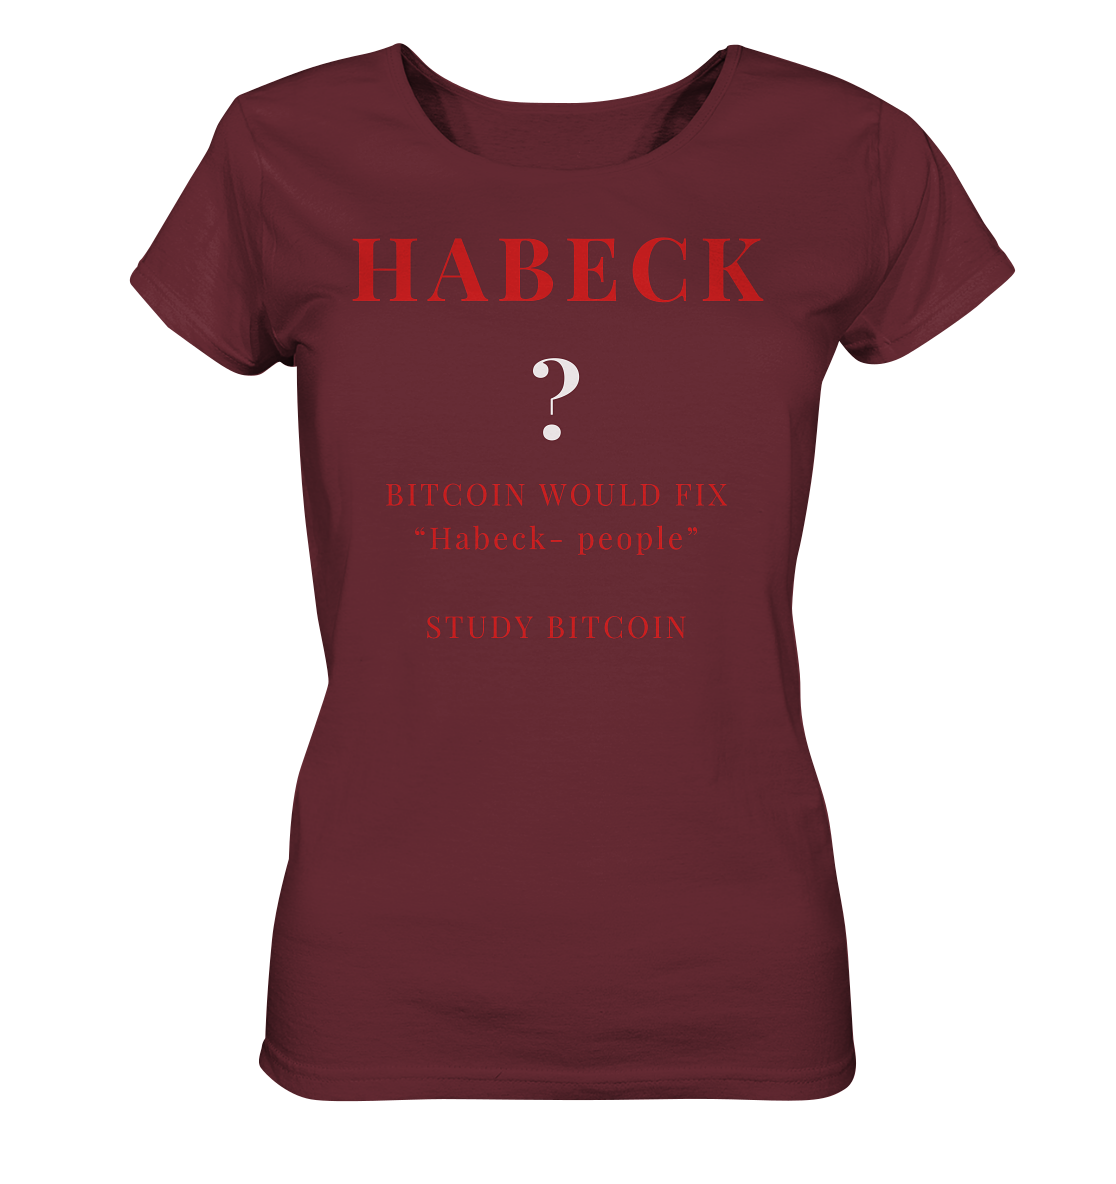 HABECK ? BITCOIN WOULD FIX "Habeck people" STUDY BITCOIN - (Ladies Collection 21% Rabatt bis zum Halving 2024) Kopie - Ladies Organic Basic Shirt